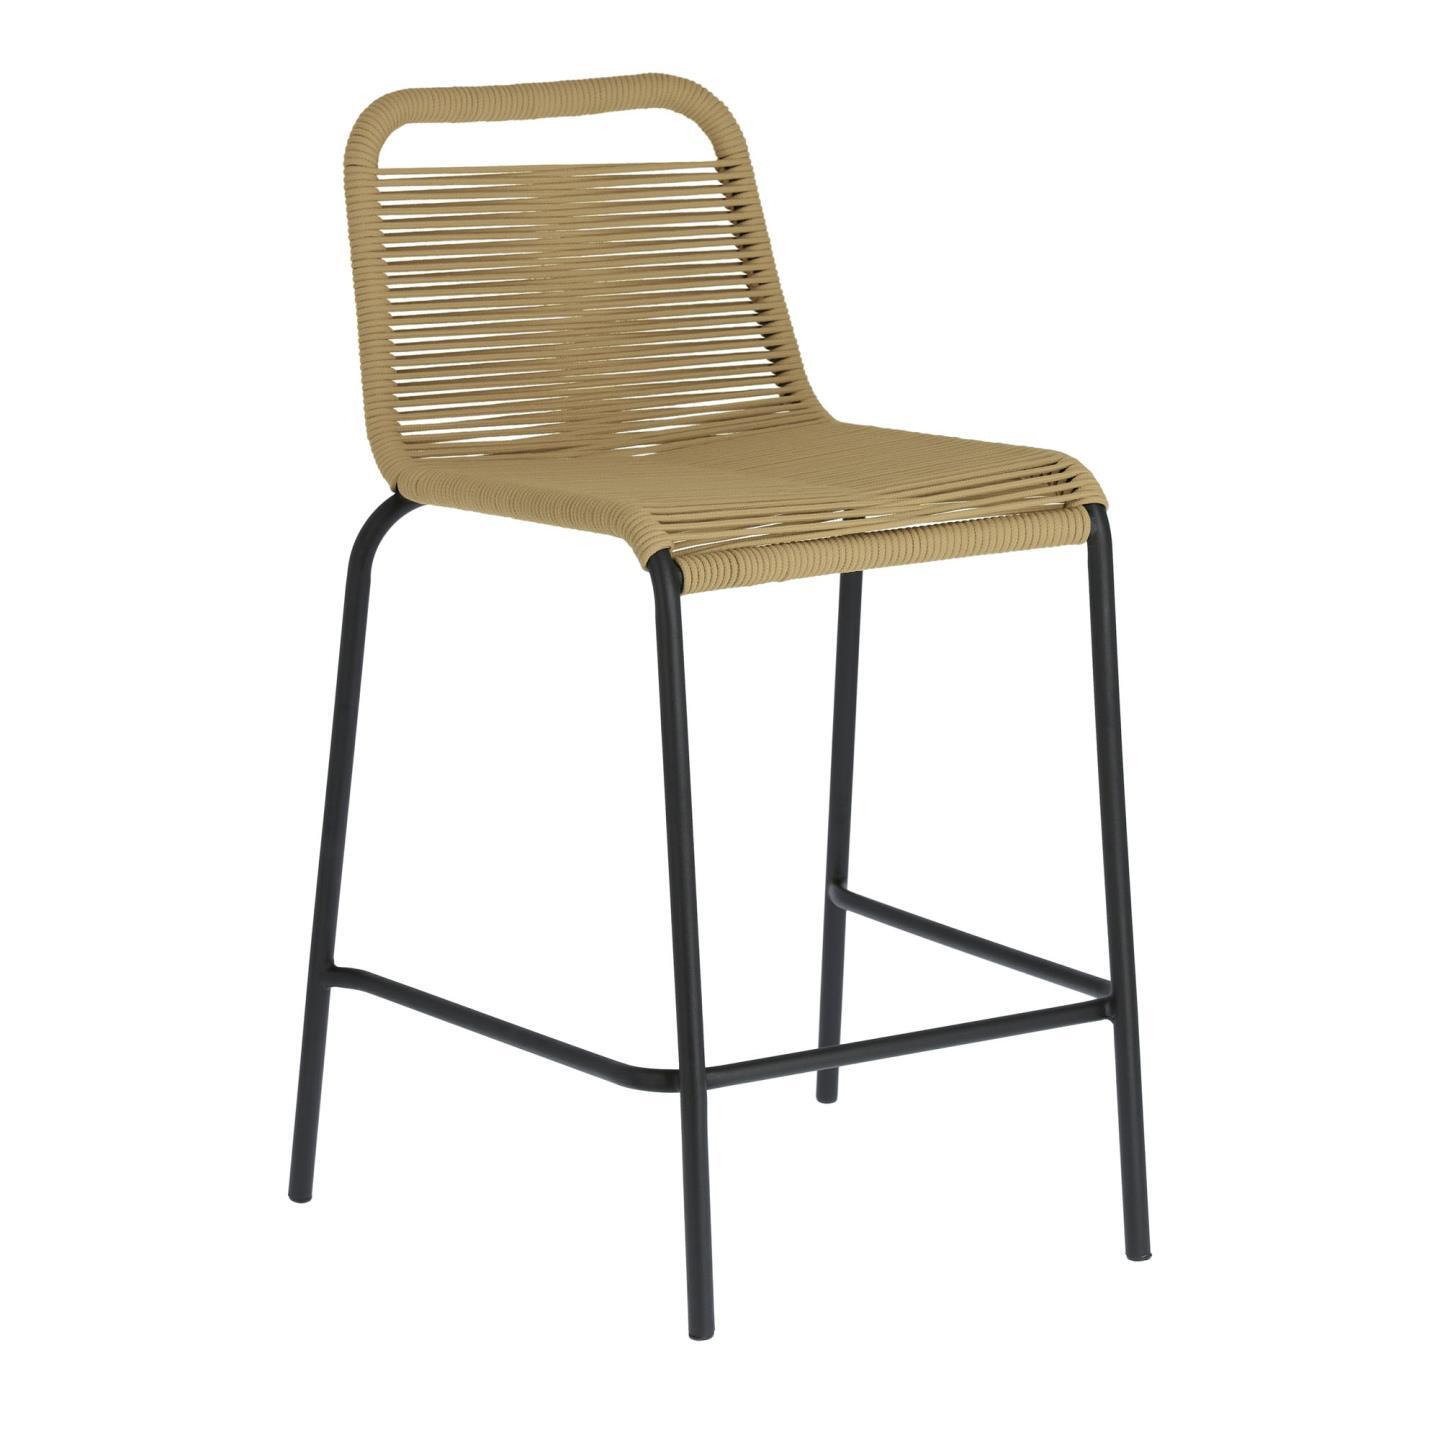 Lambton stool in brown rope and black finish steel 62 cm